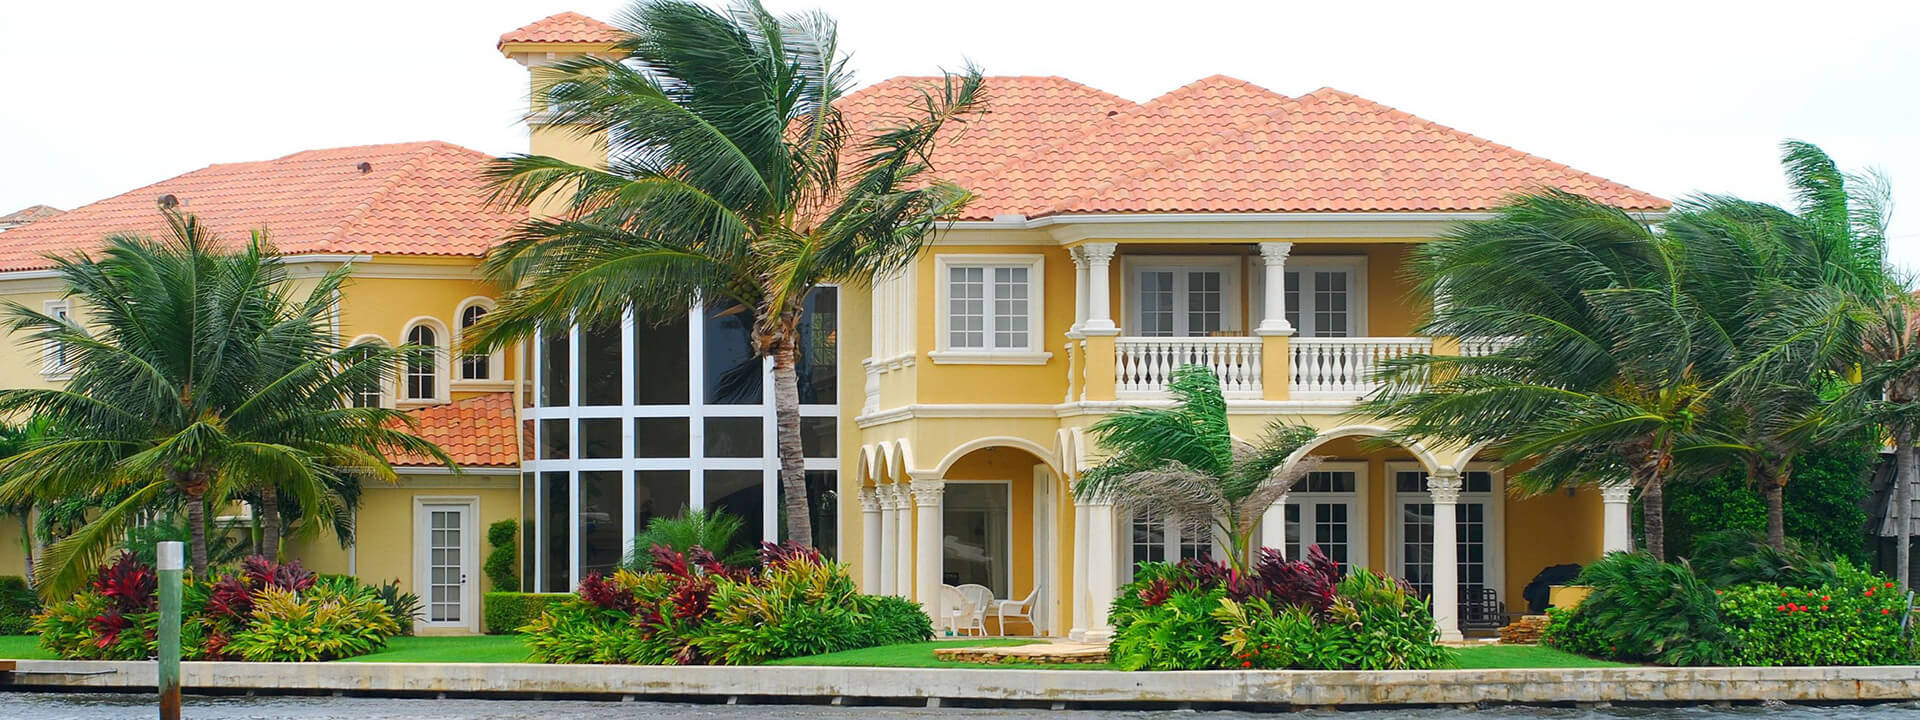 Palm beach county real estate appraiser